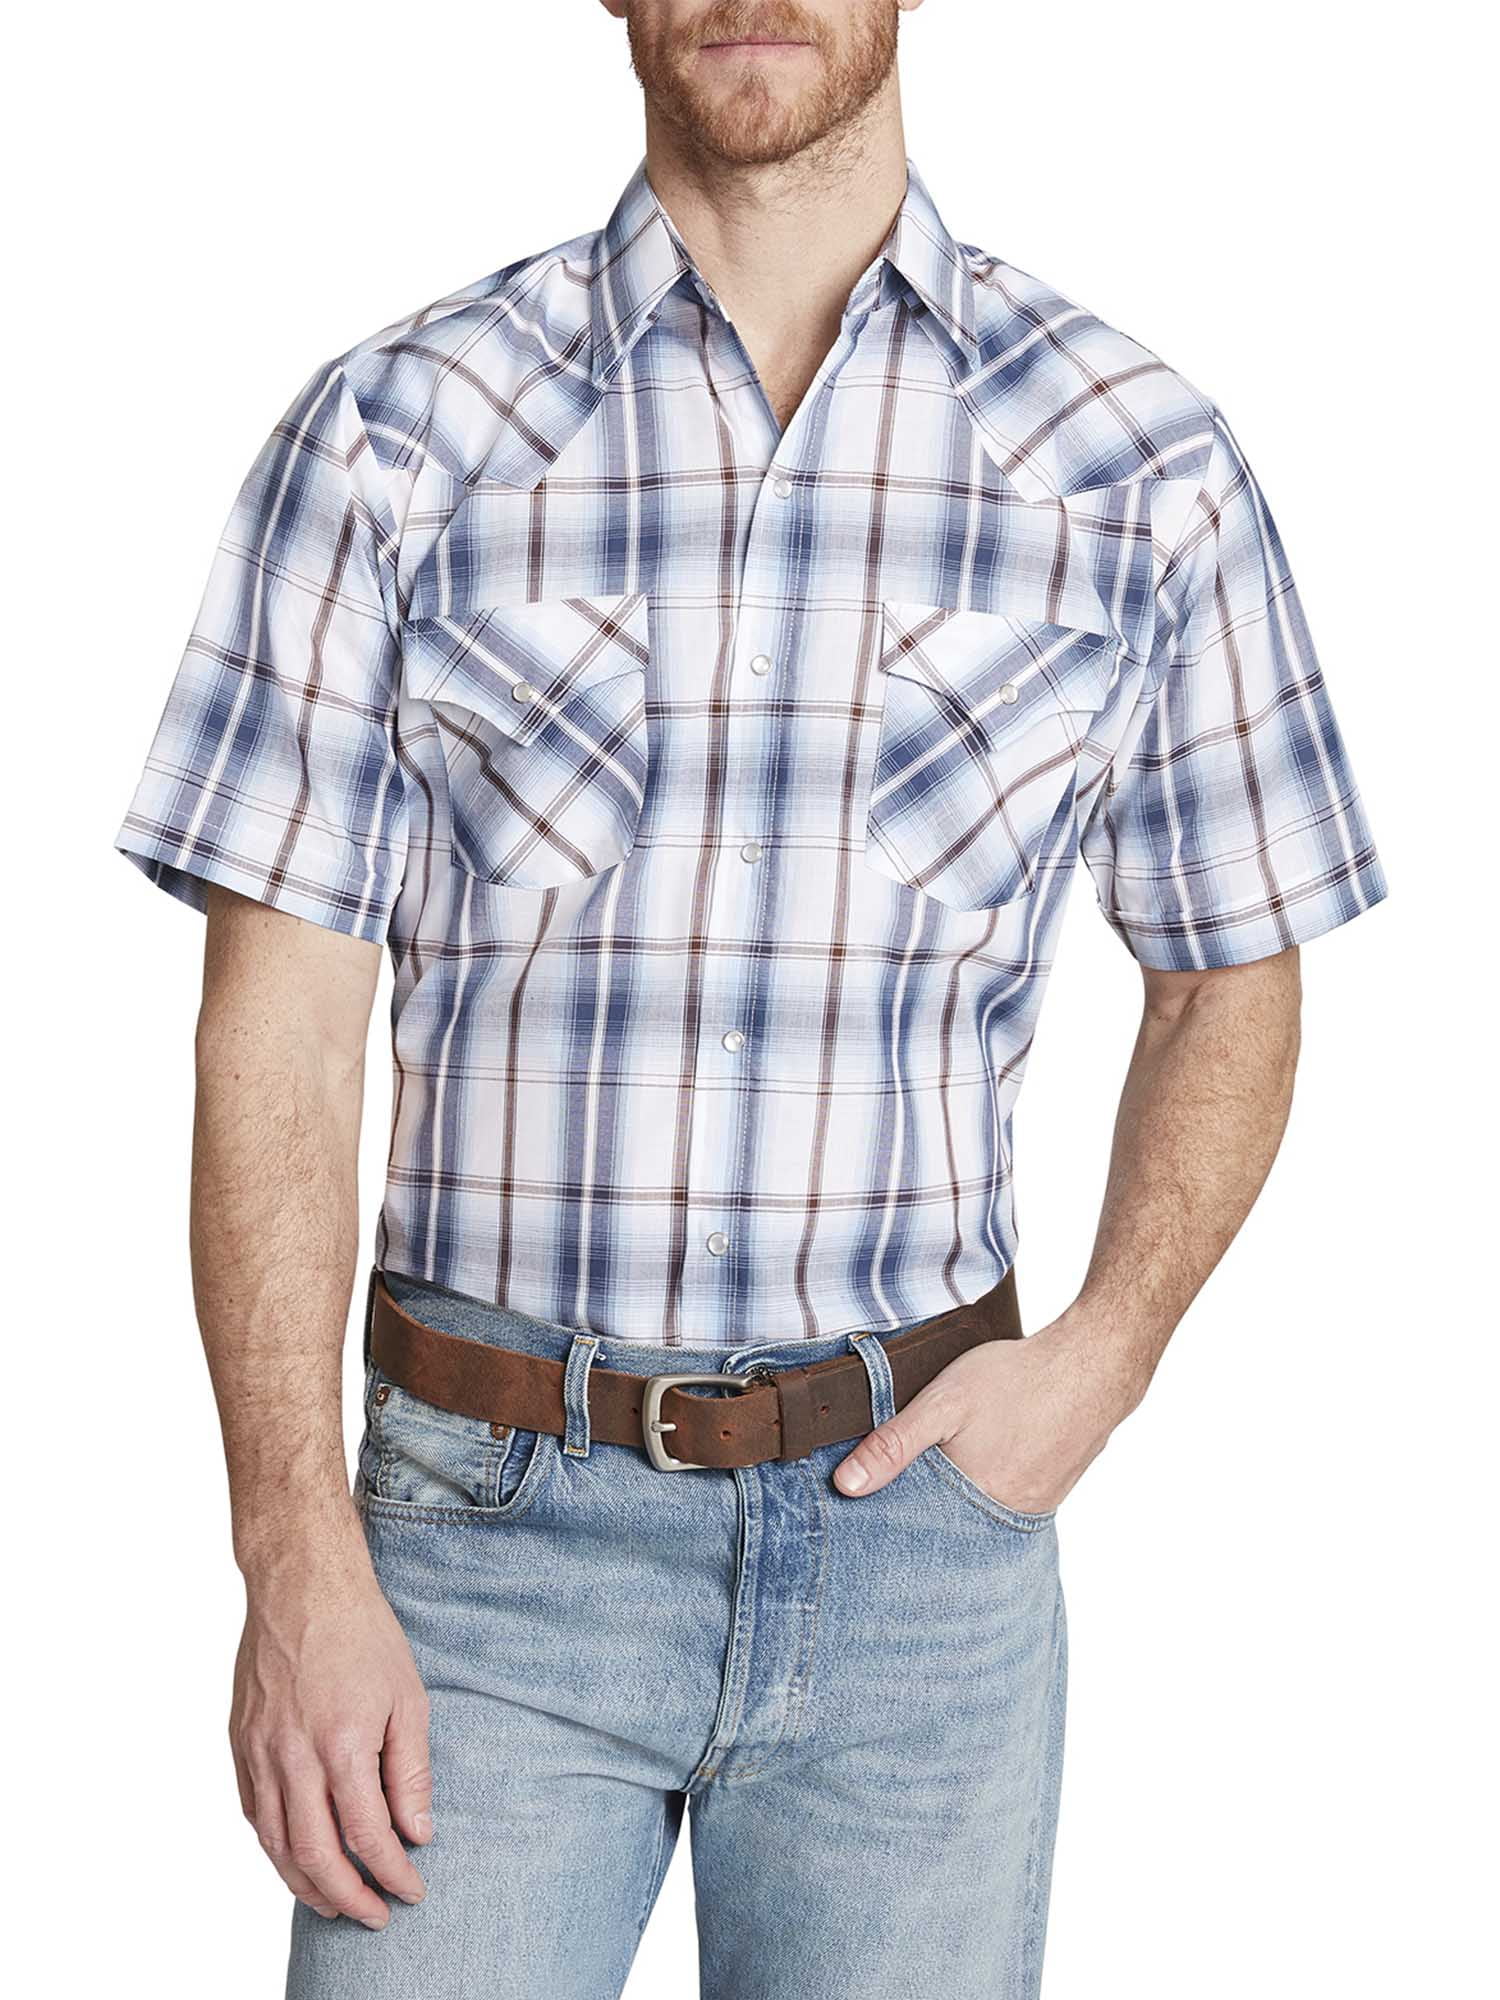 Ely Cattleman Big and Tall Short Sleeve Western Plaid Shirt - Walmart.com